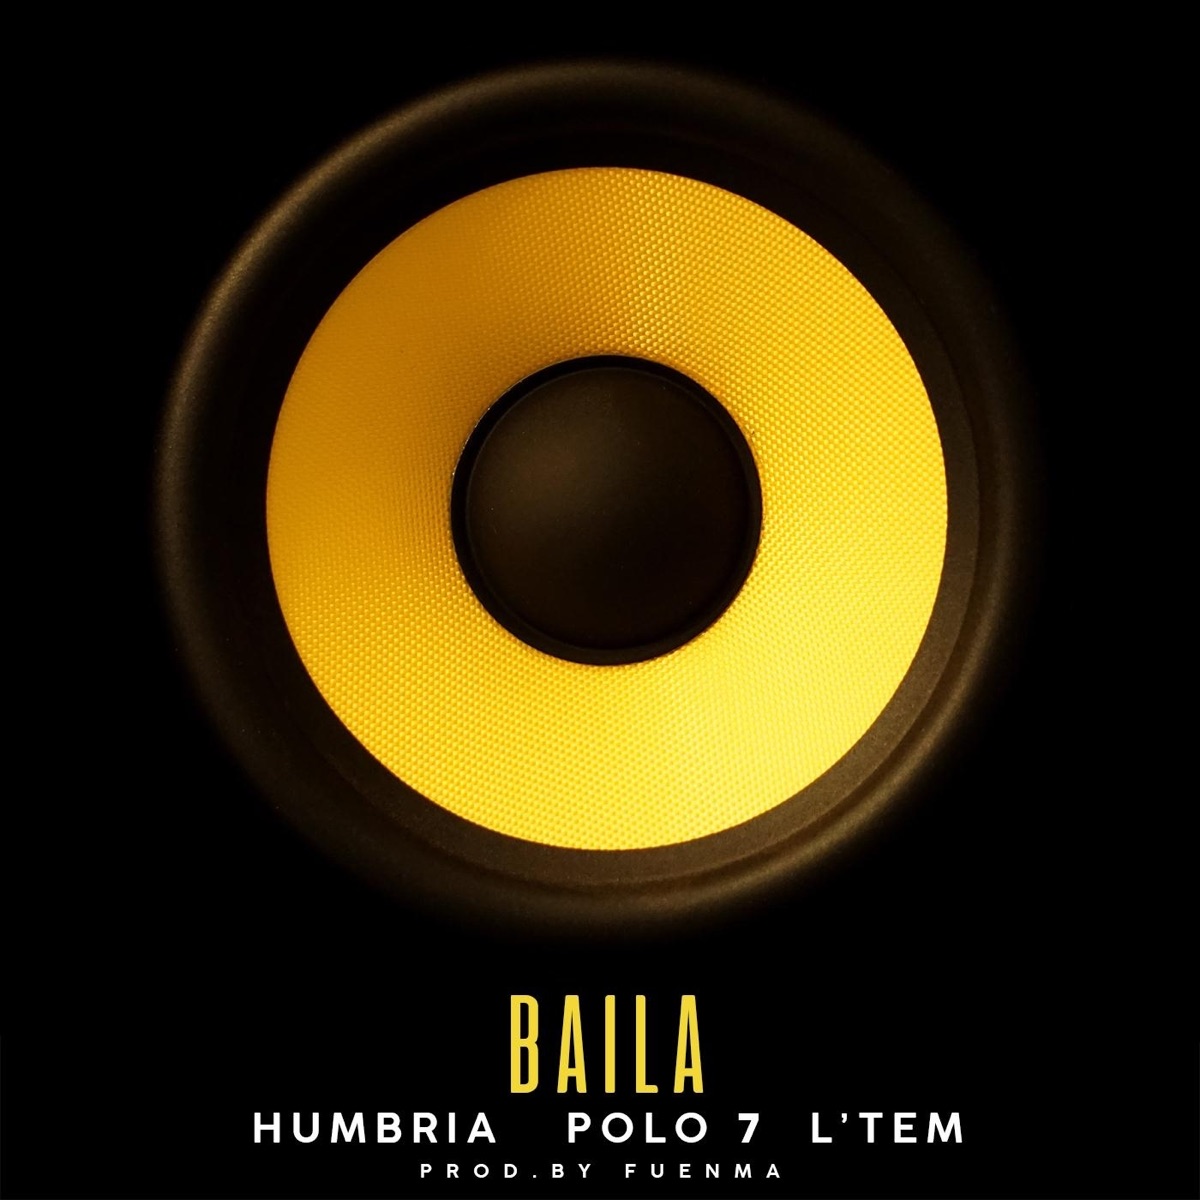 PONERTELO - Single - Album by Humbria - Apple Music